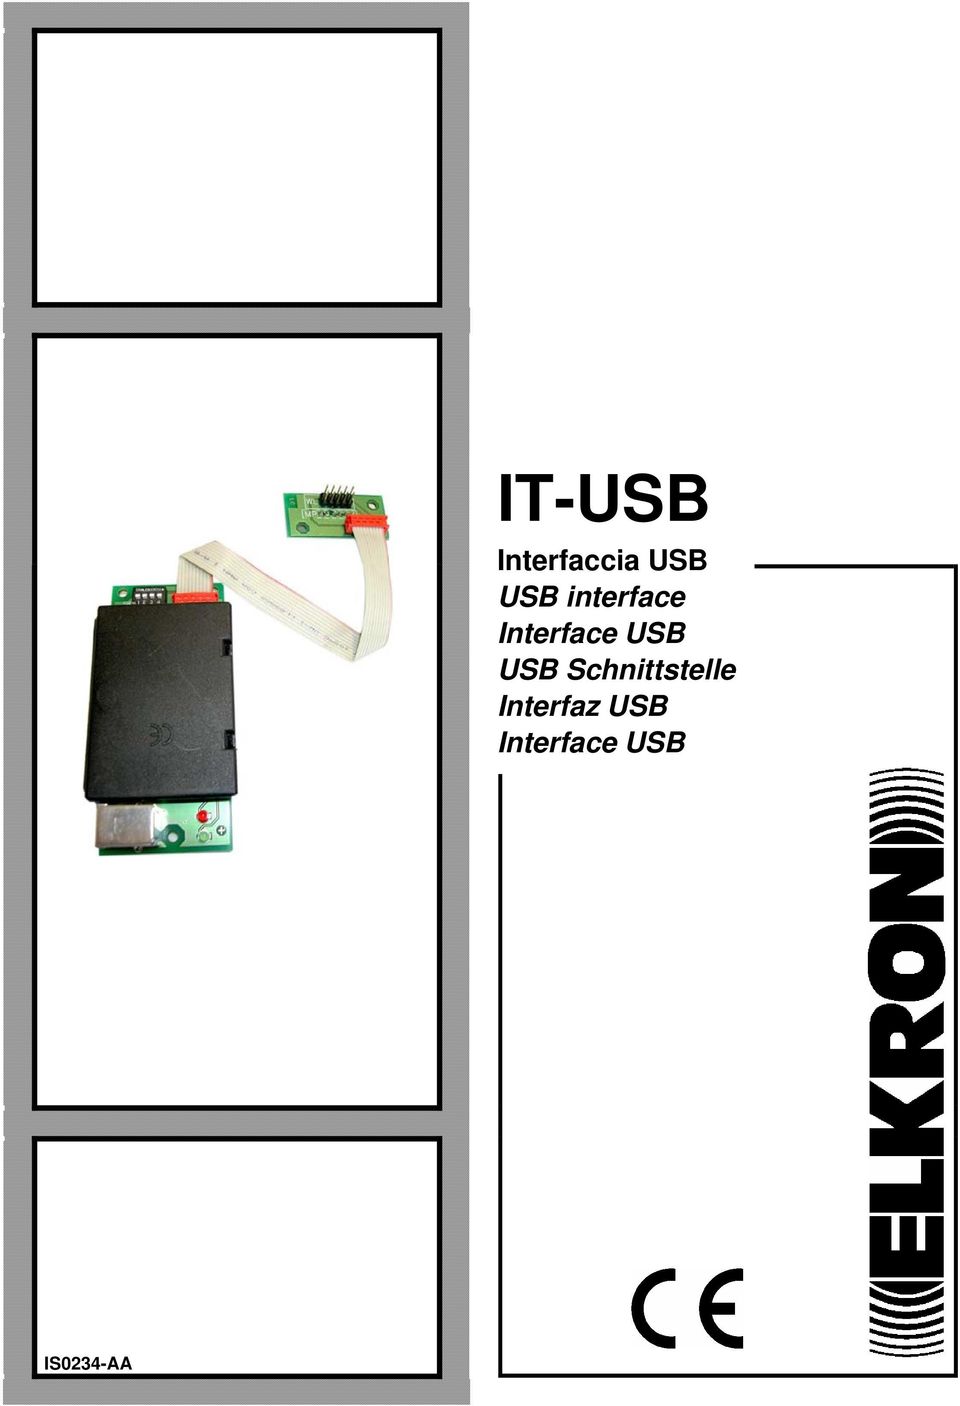 Schnittstelle Interfaz USB